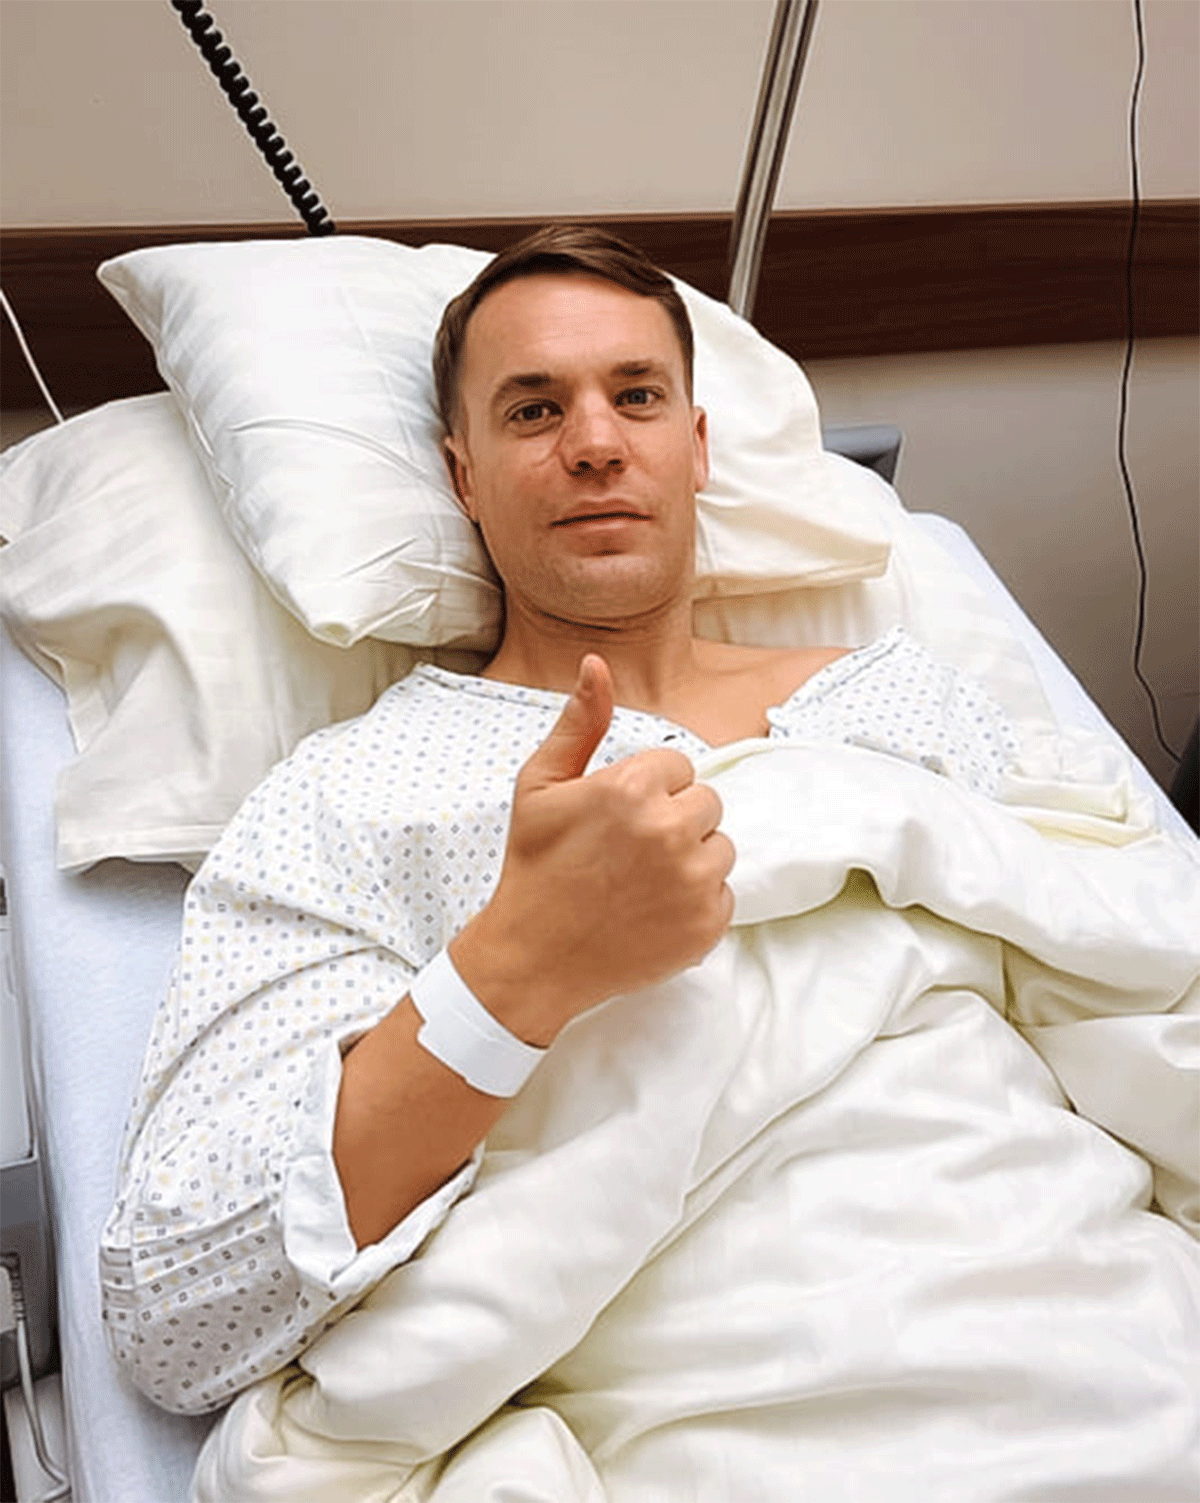 Manuel Neuer underwent a successful knee surgery on Sunday